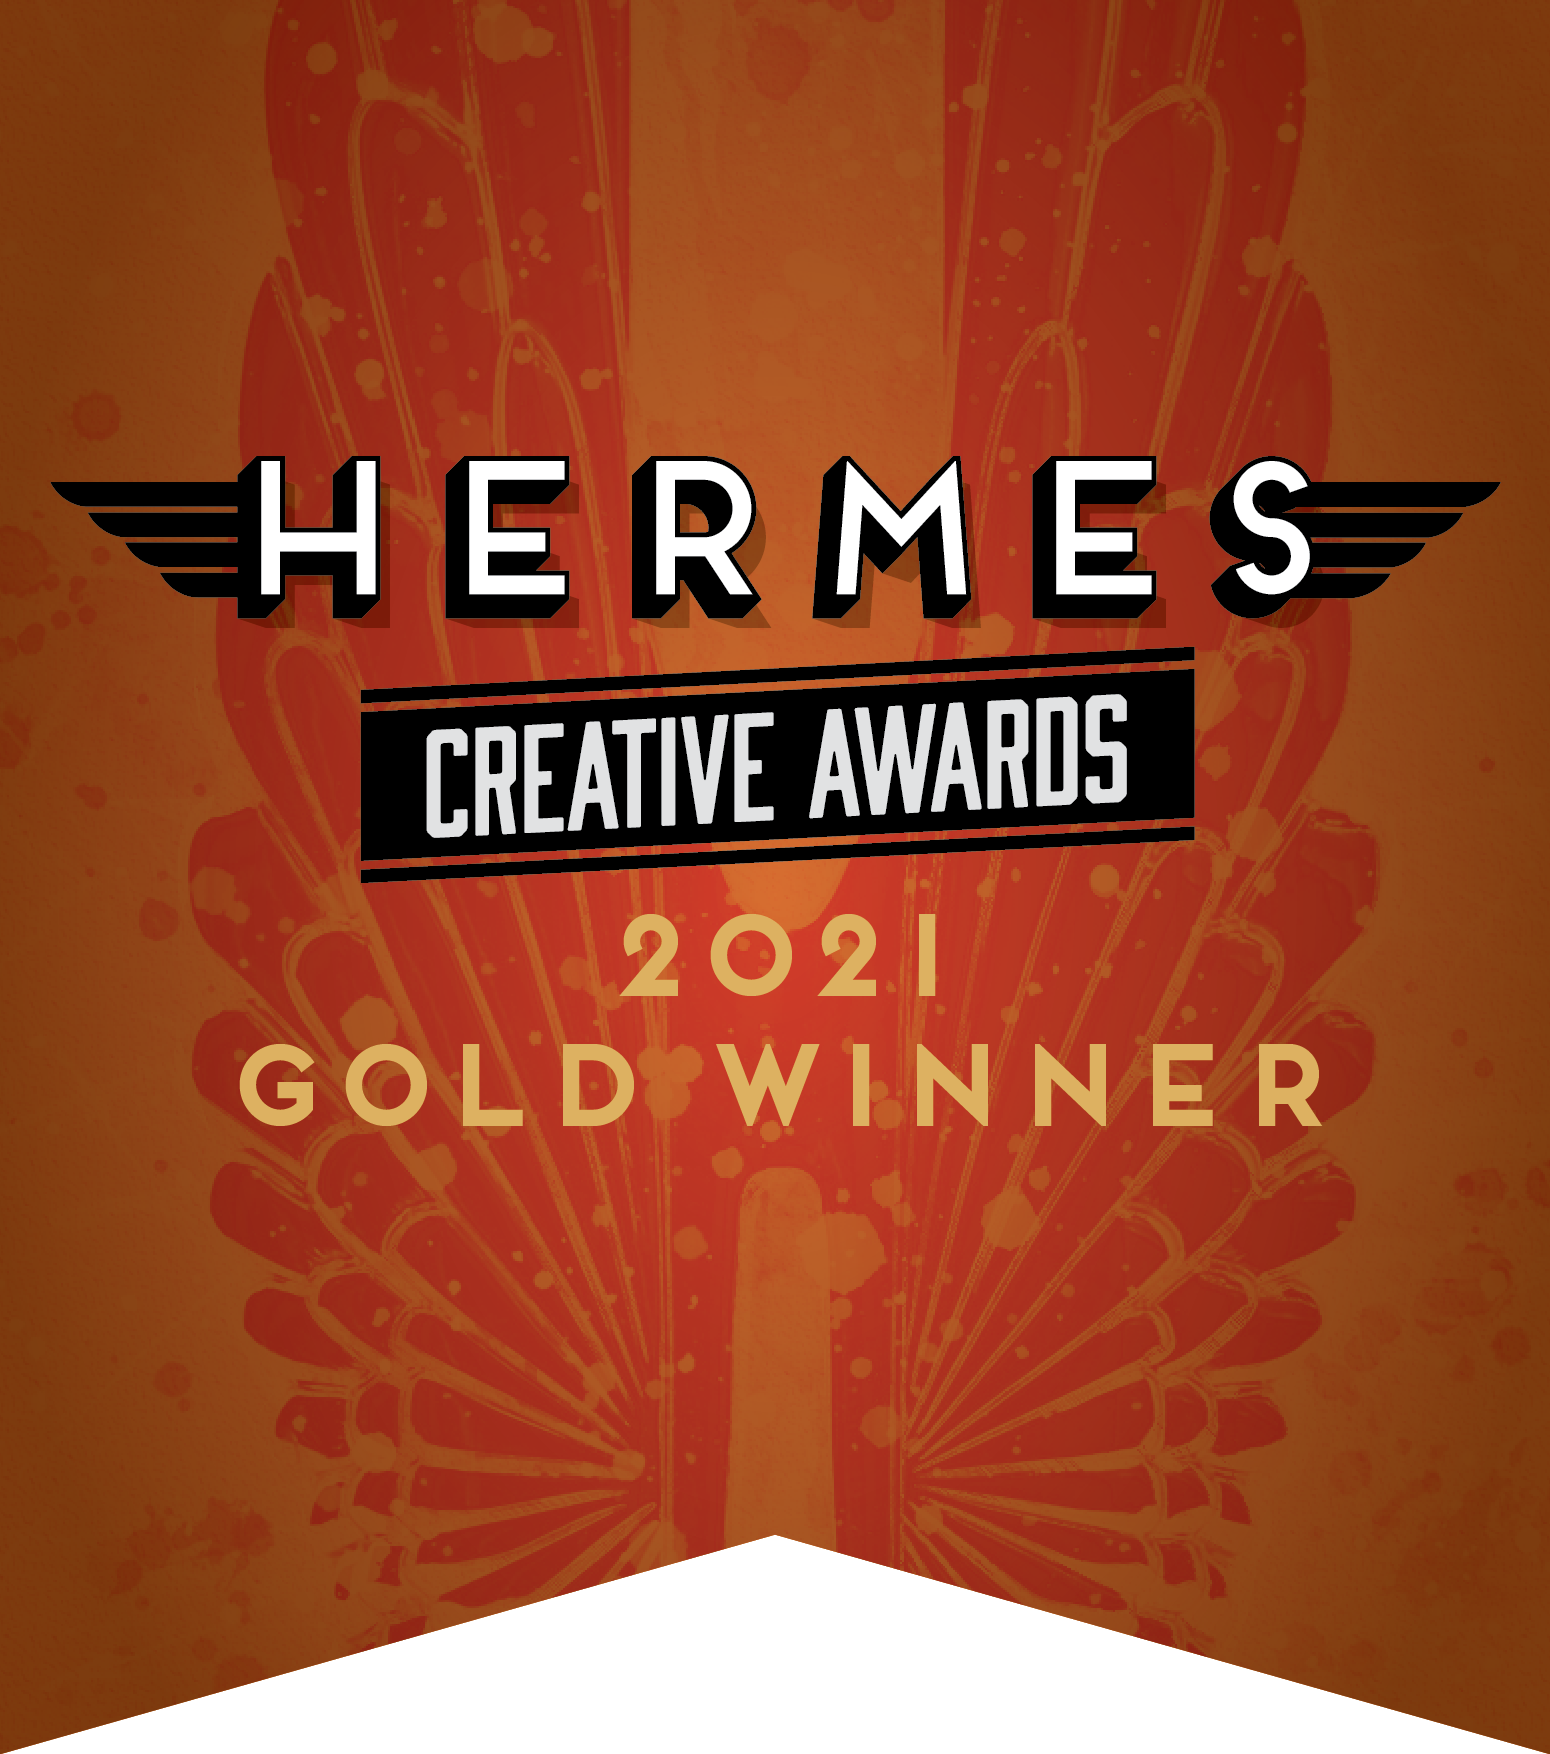 Hermes creative awards 2021 gold winner, Big Kahuna web portal account